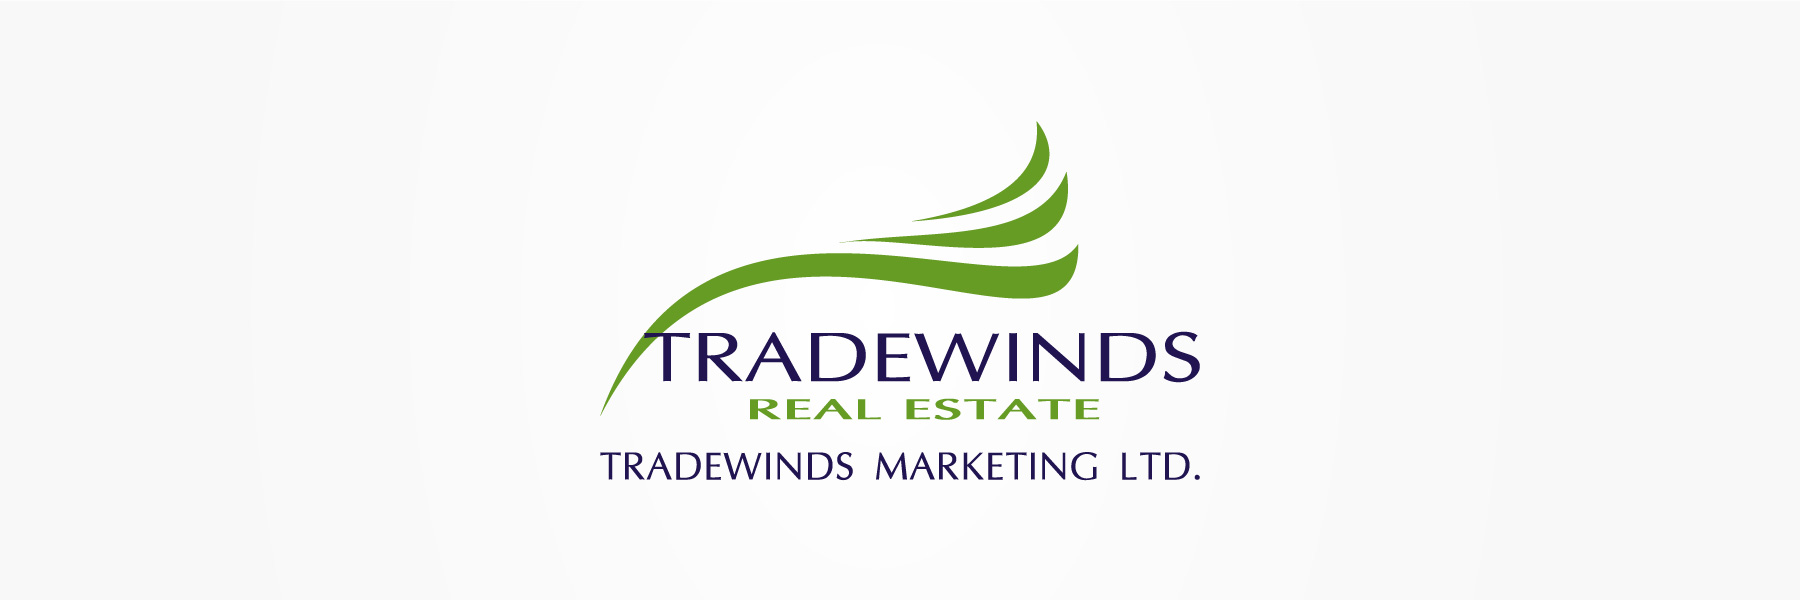 Tradewinds-real-estate-logo-design